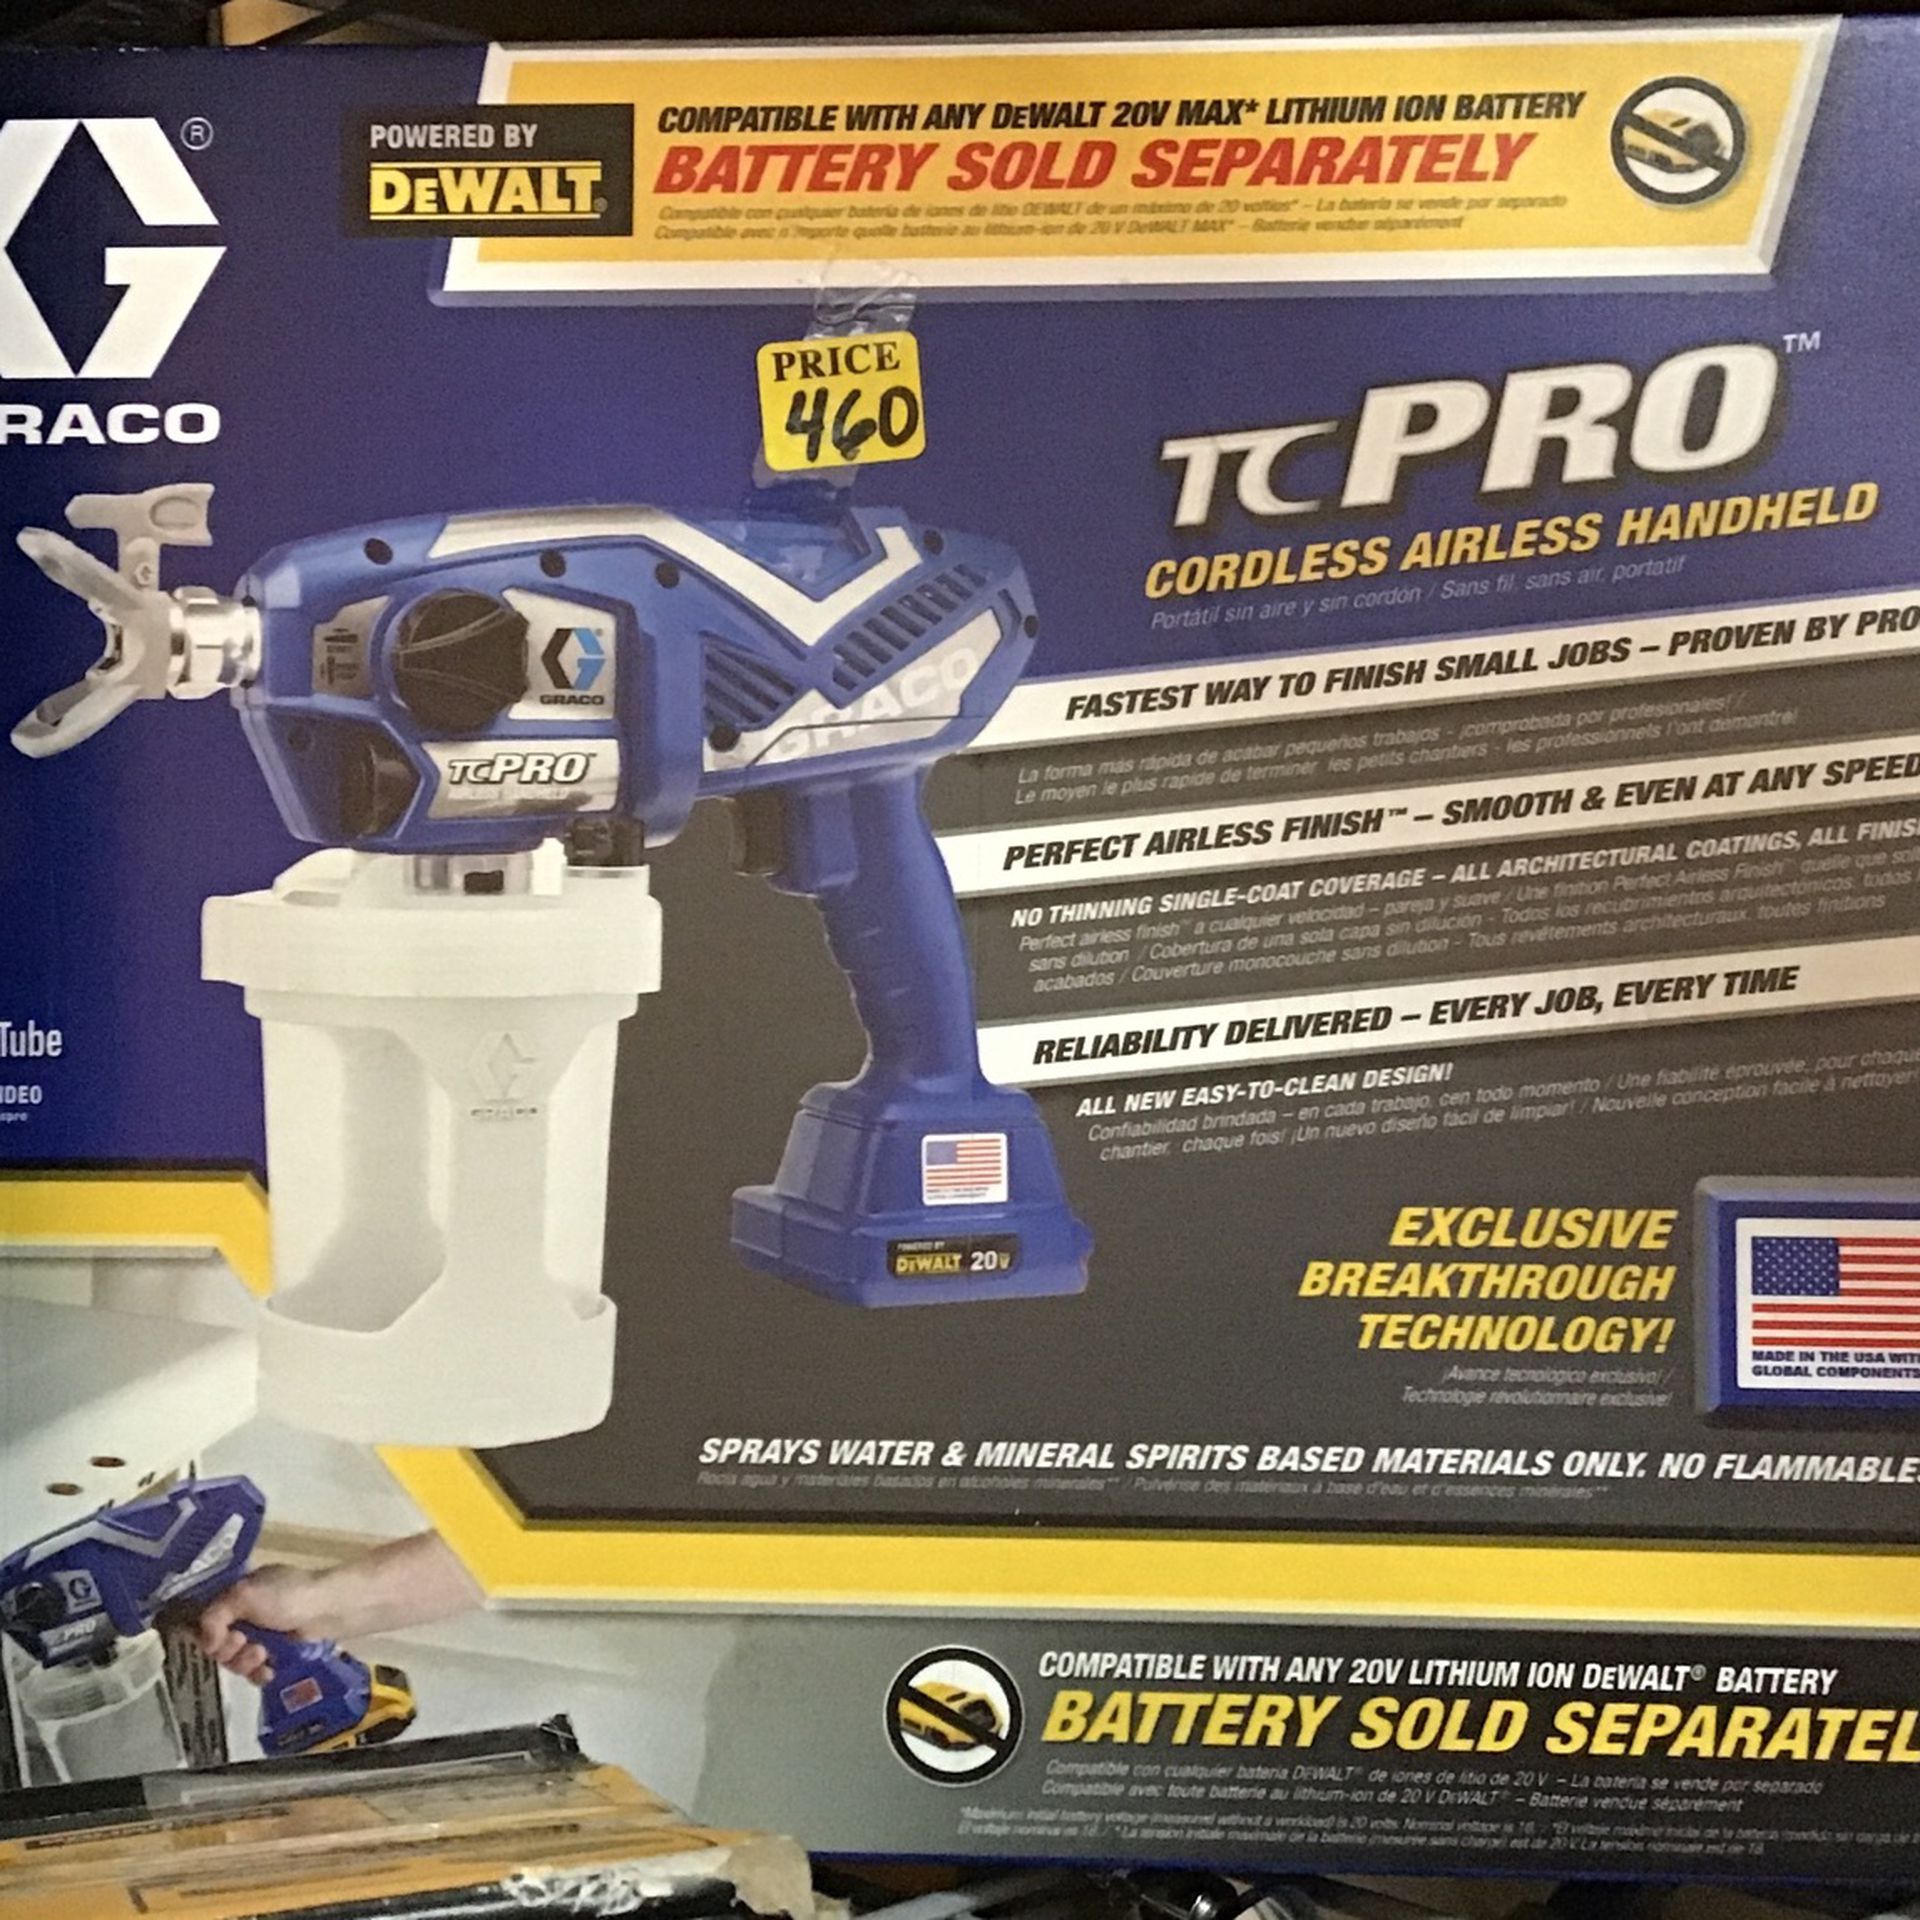 Graco TC Pro Plus Cordless Battery Handheld Airless Paint Sprayer